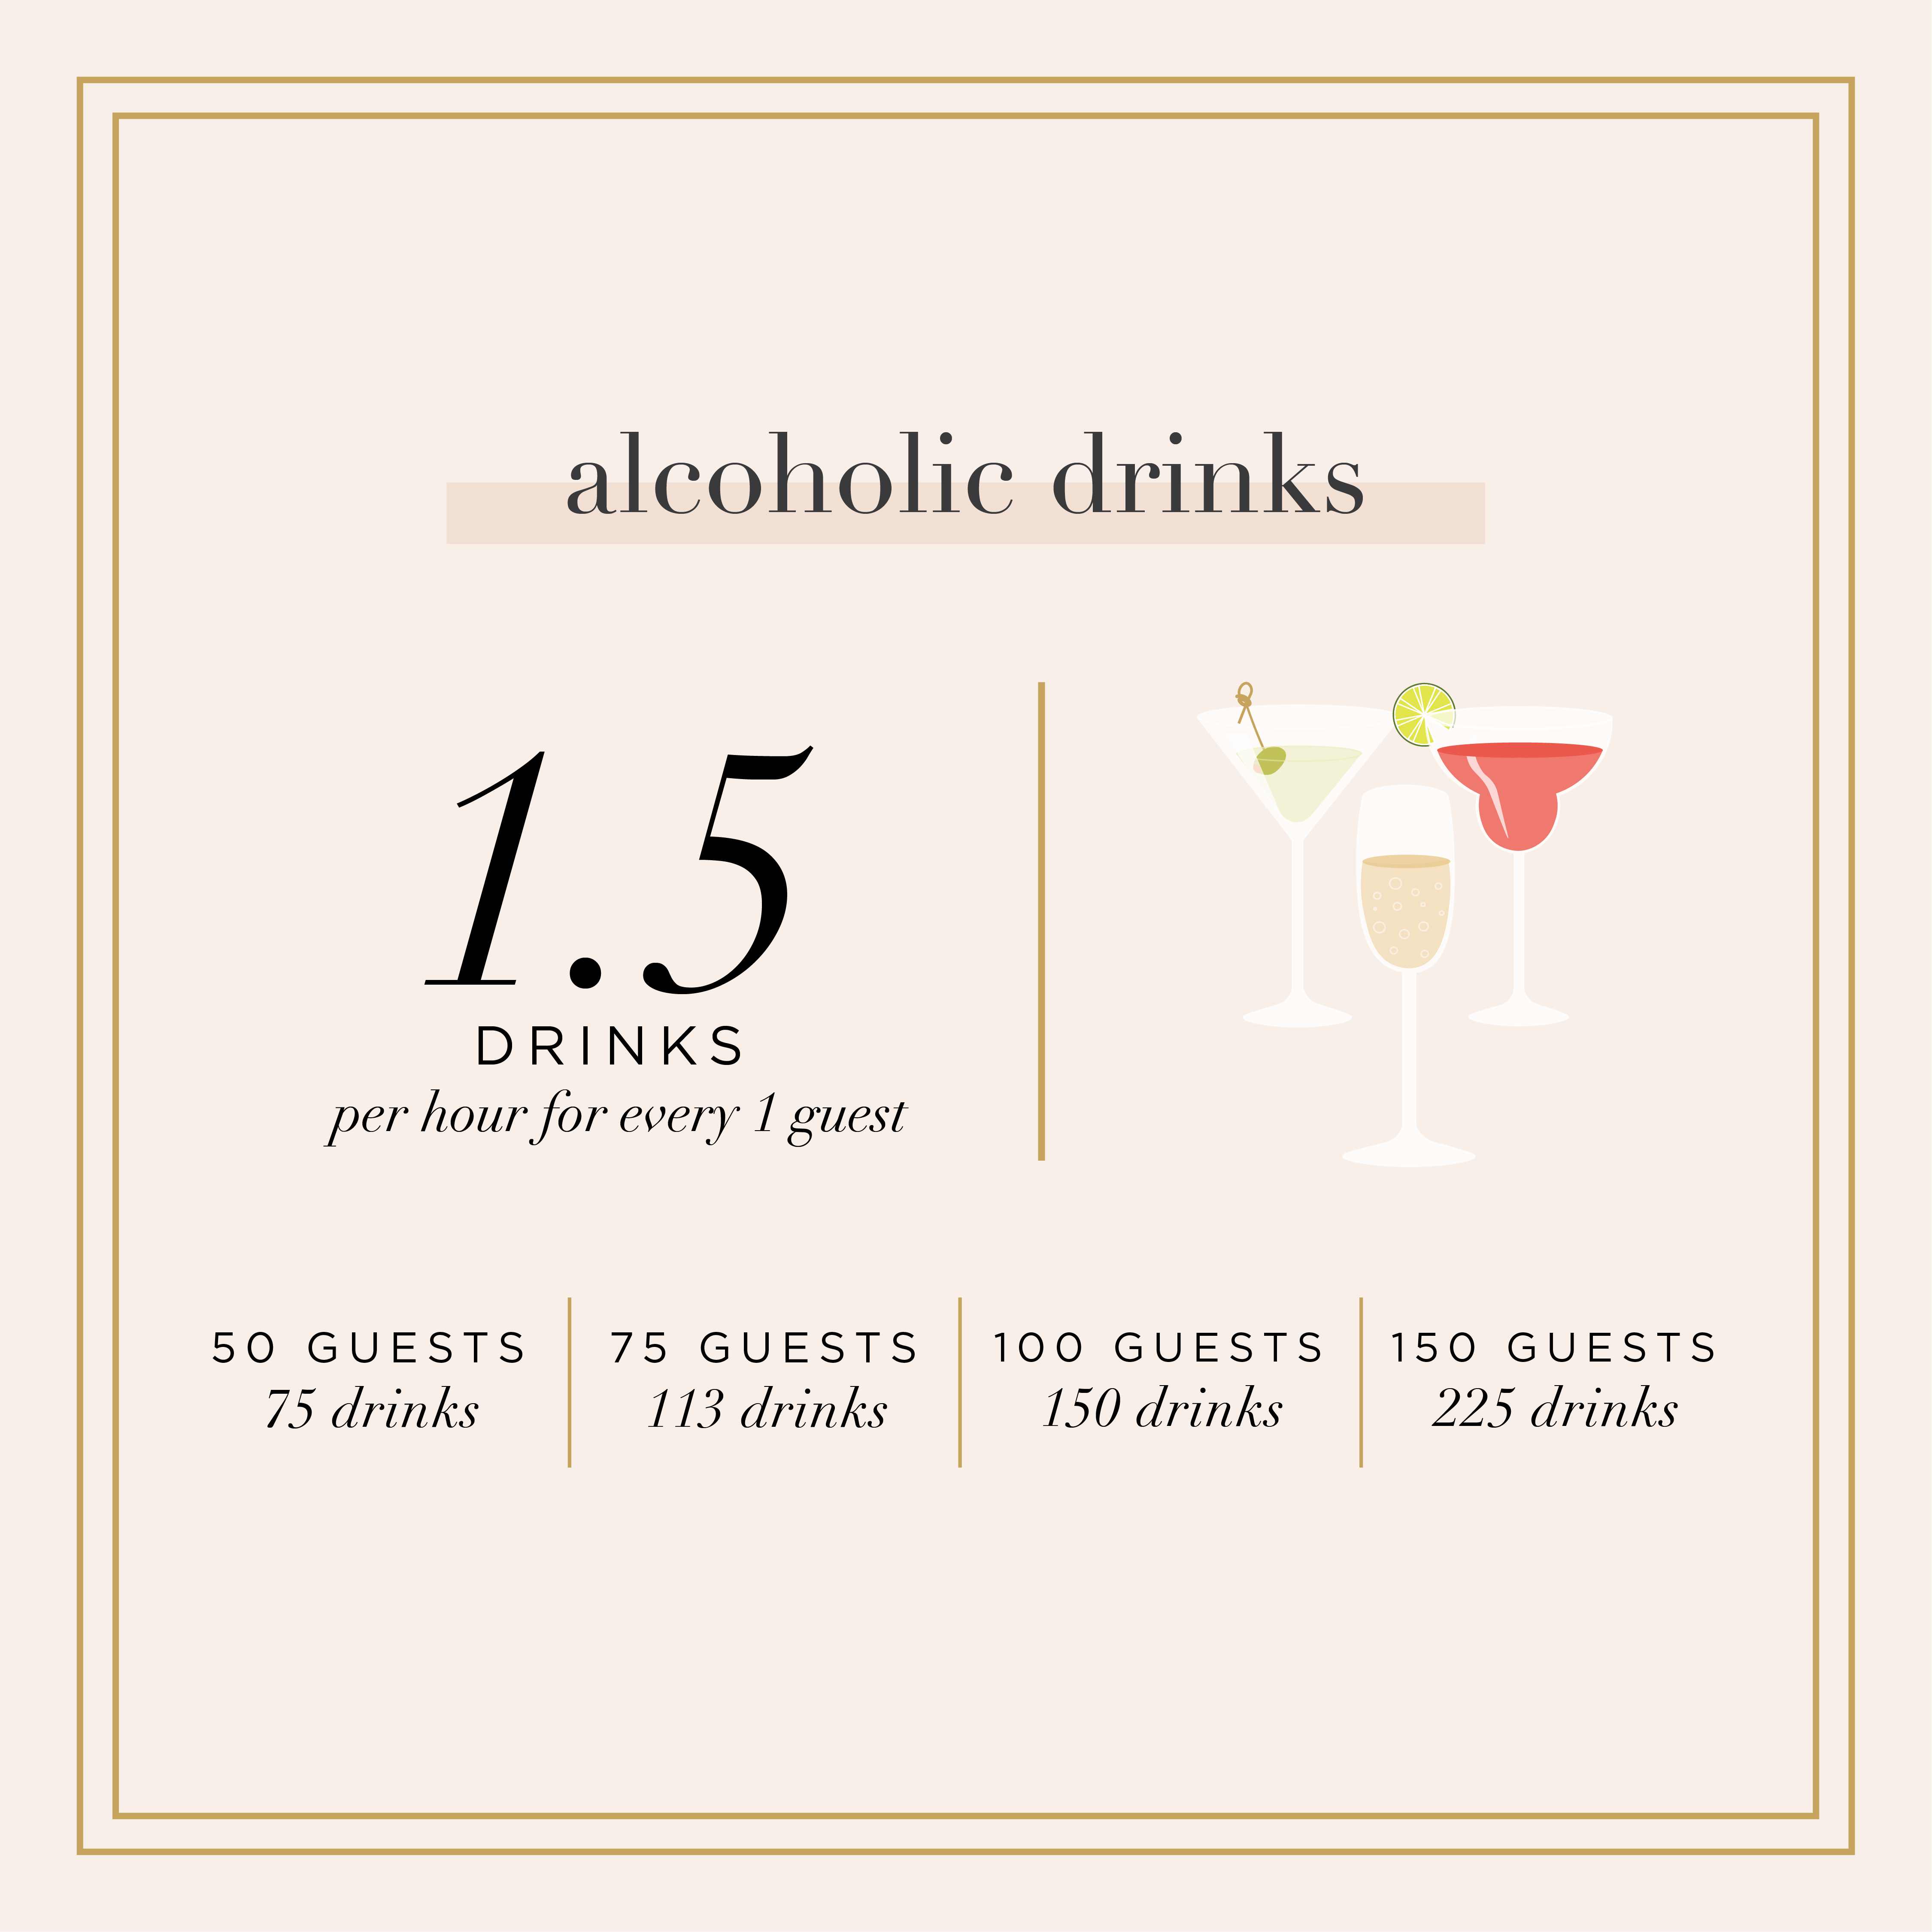 wedding alcohol amount guide